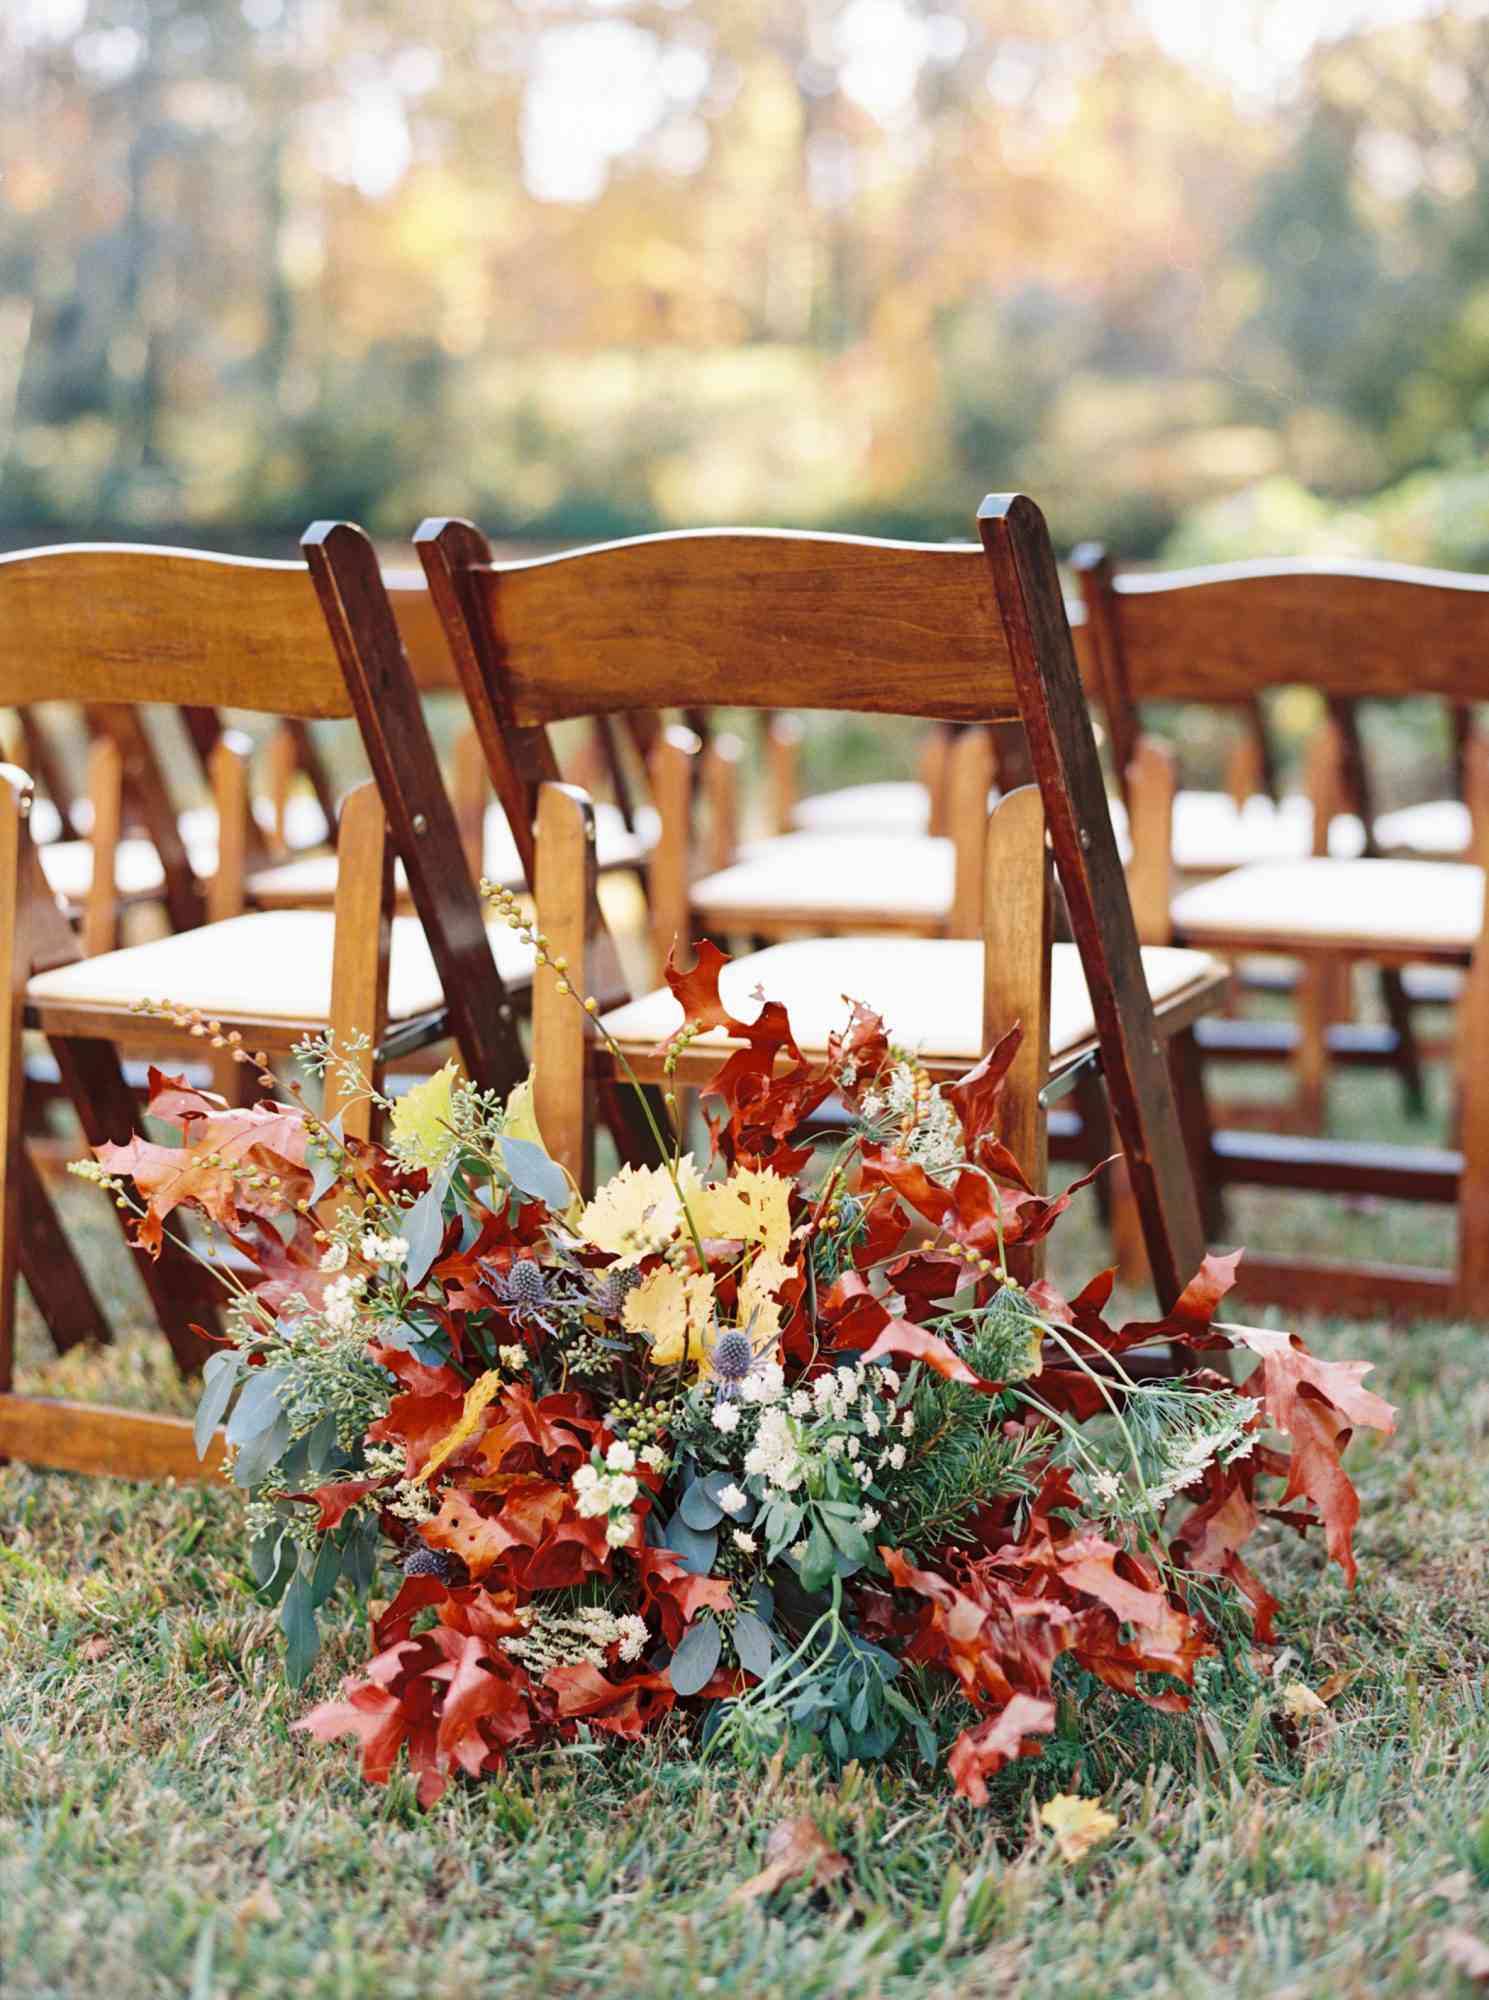 Colorful fall leaf arrangement behind chair